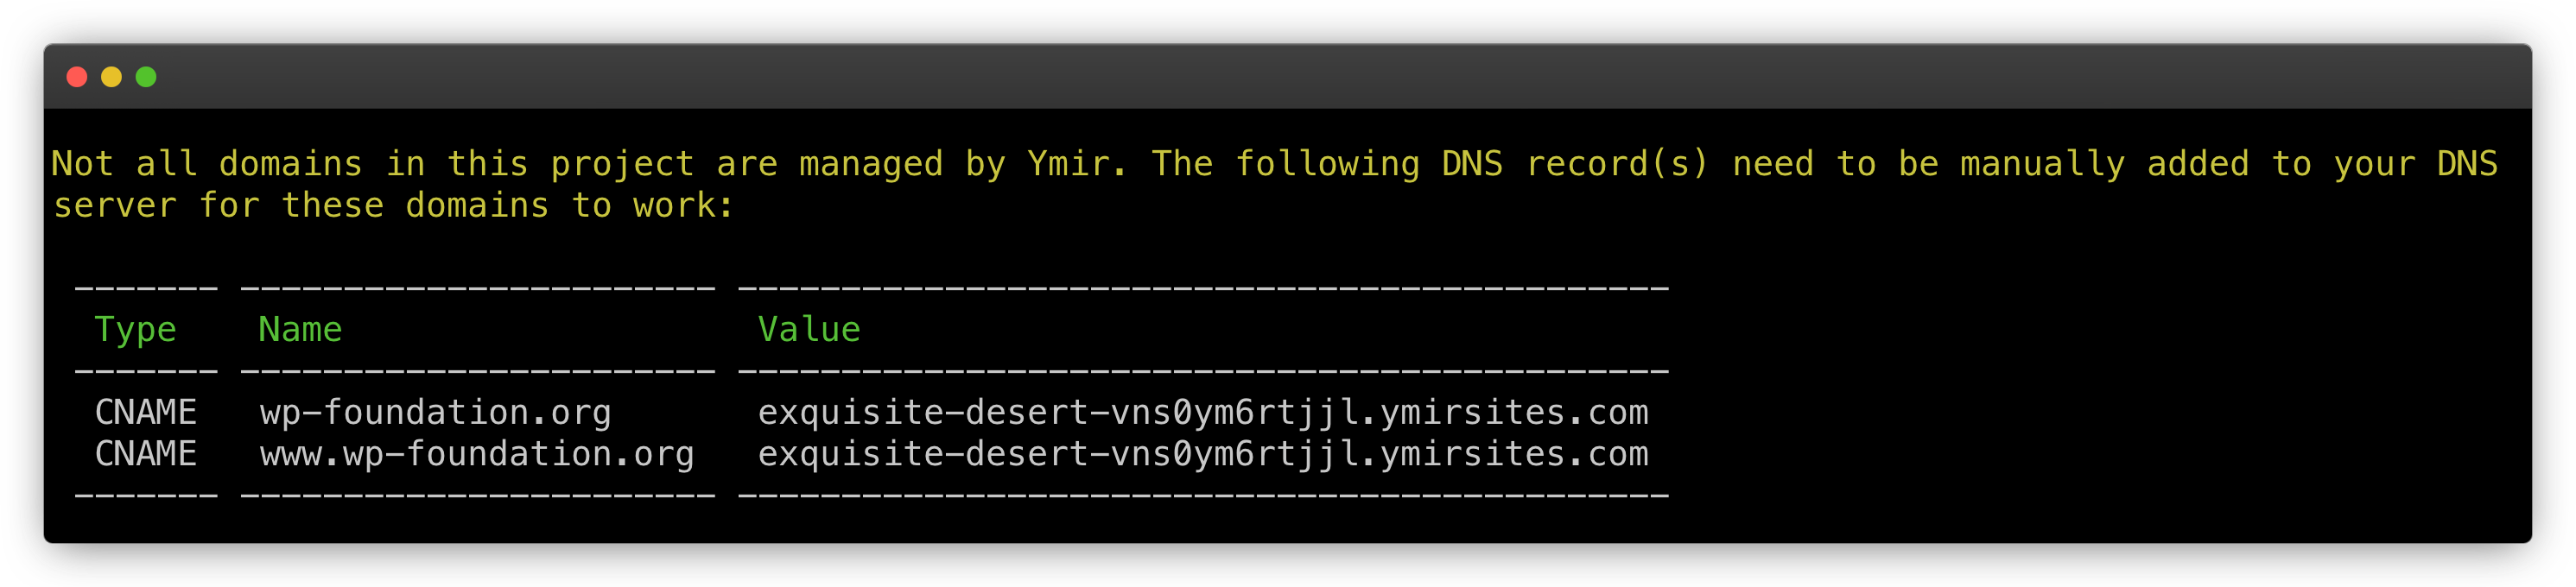 Ymir CLI DNS records